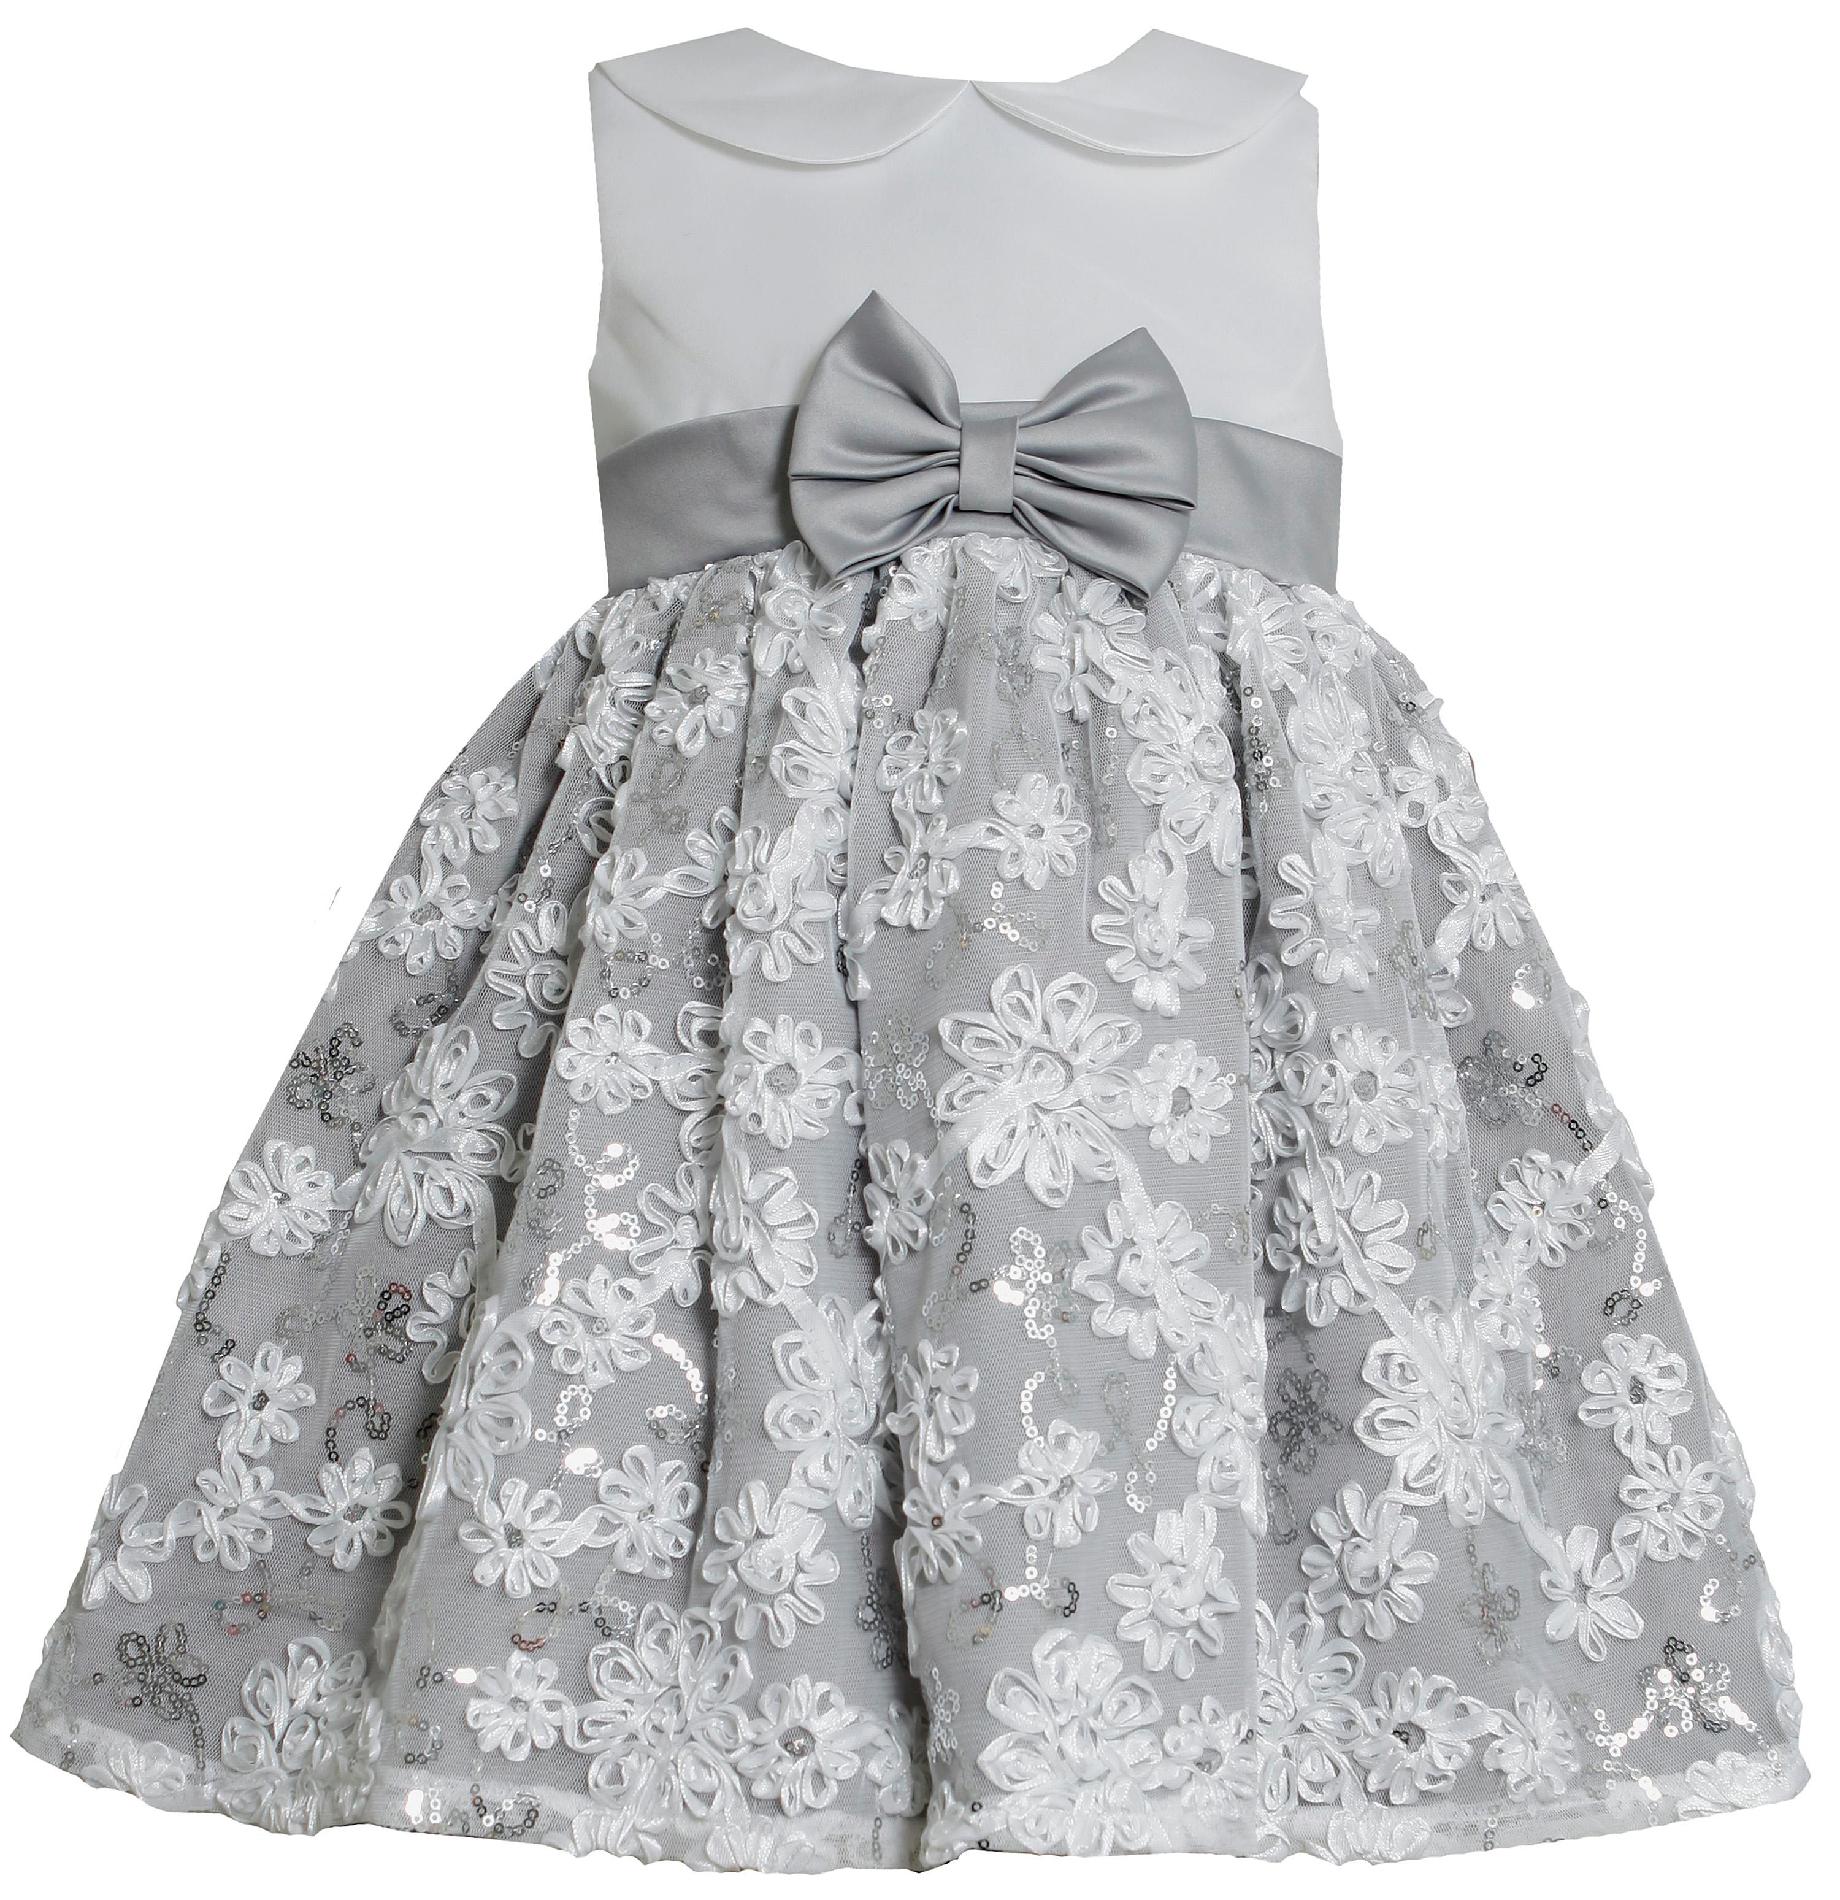 Ashley Ann Girls' Soutache Sleeveless Floral Party Dress